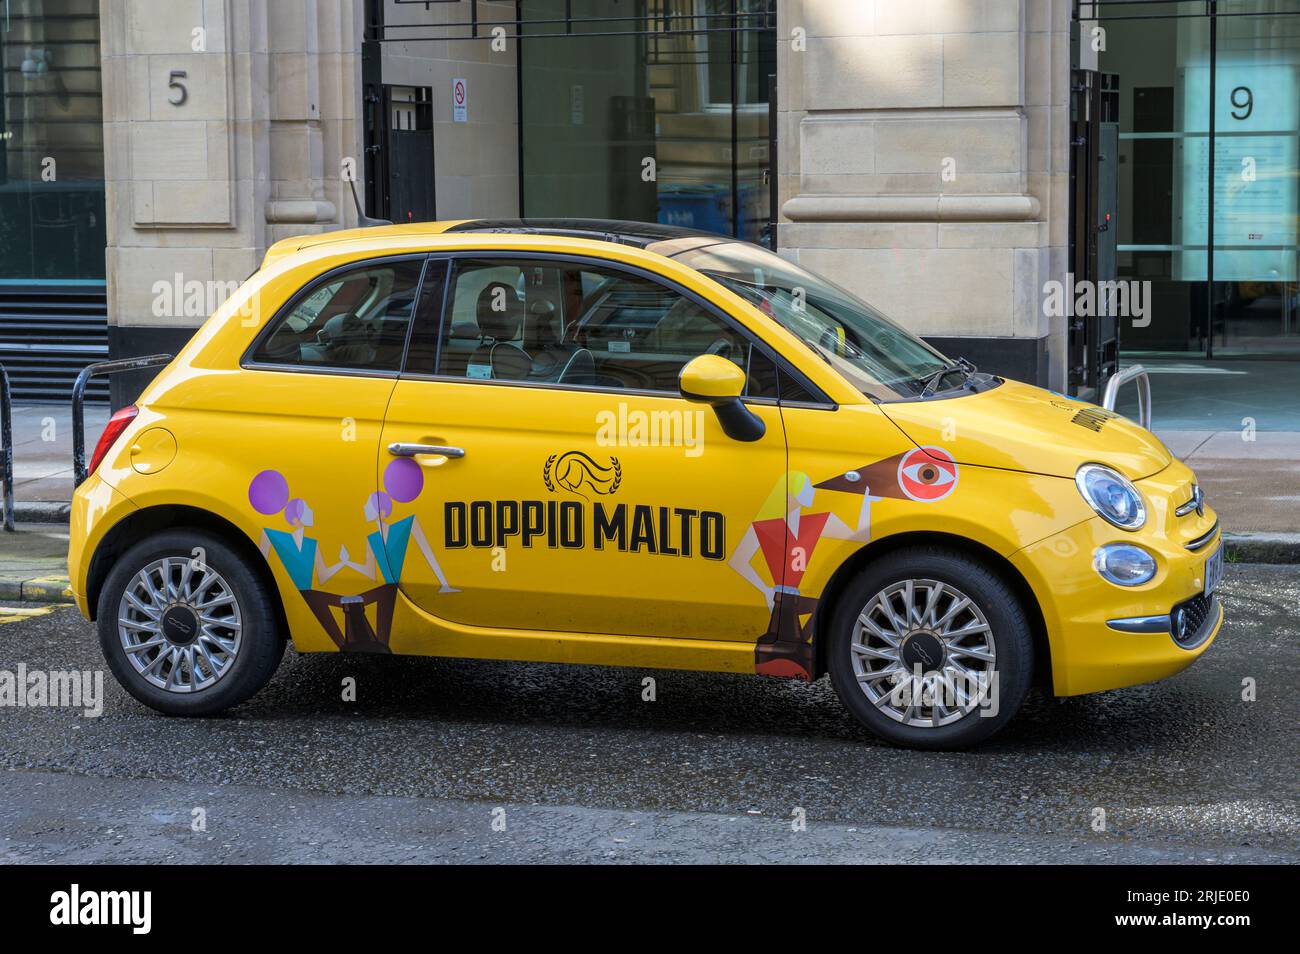 Doppio Malto Italian Restaurant branding advertised on a Fiat 500 car, Glasgow, Scotland, UK, Europe Stock Photo